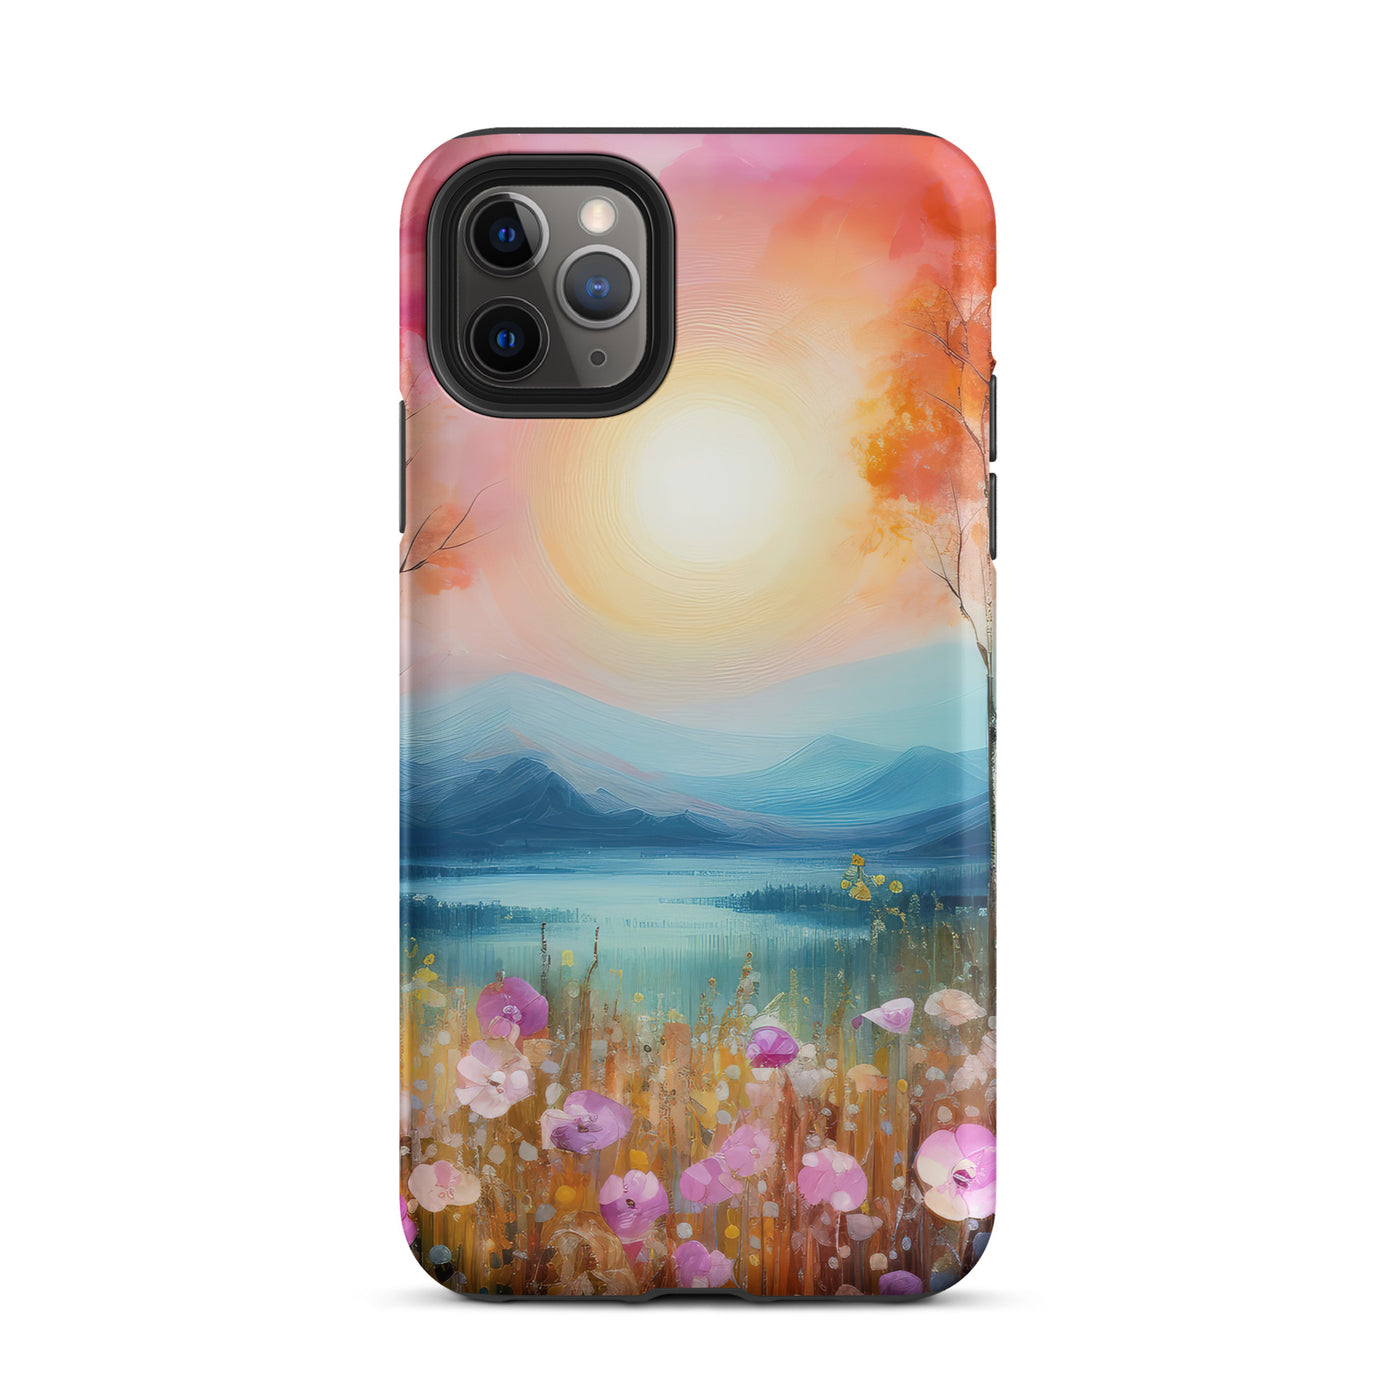 Berge, See, pinke Bäume und Blumen - Malerei - iPhone Schutzhülle (robust) berge xxx iPhone 11 Pro Max